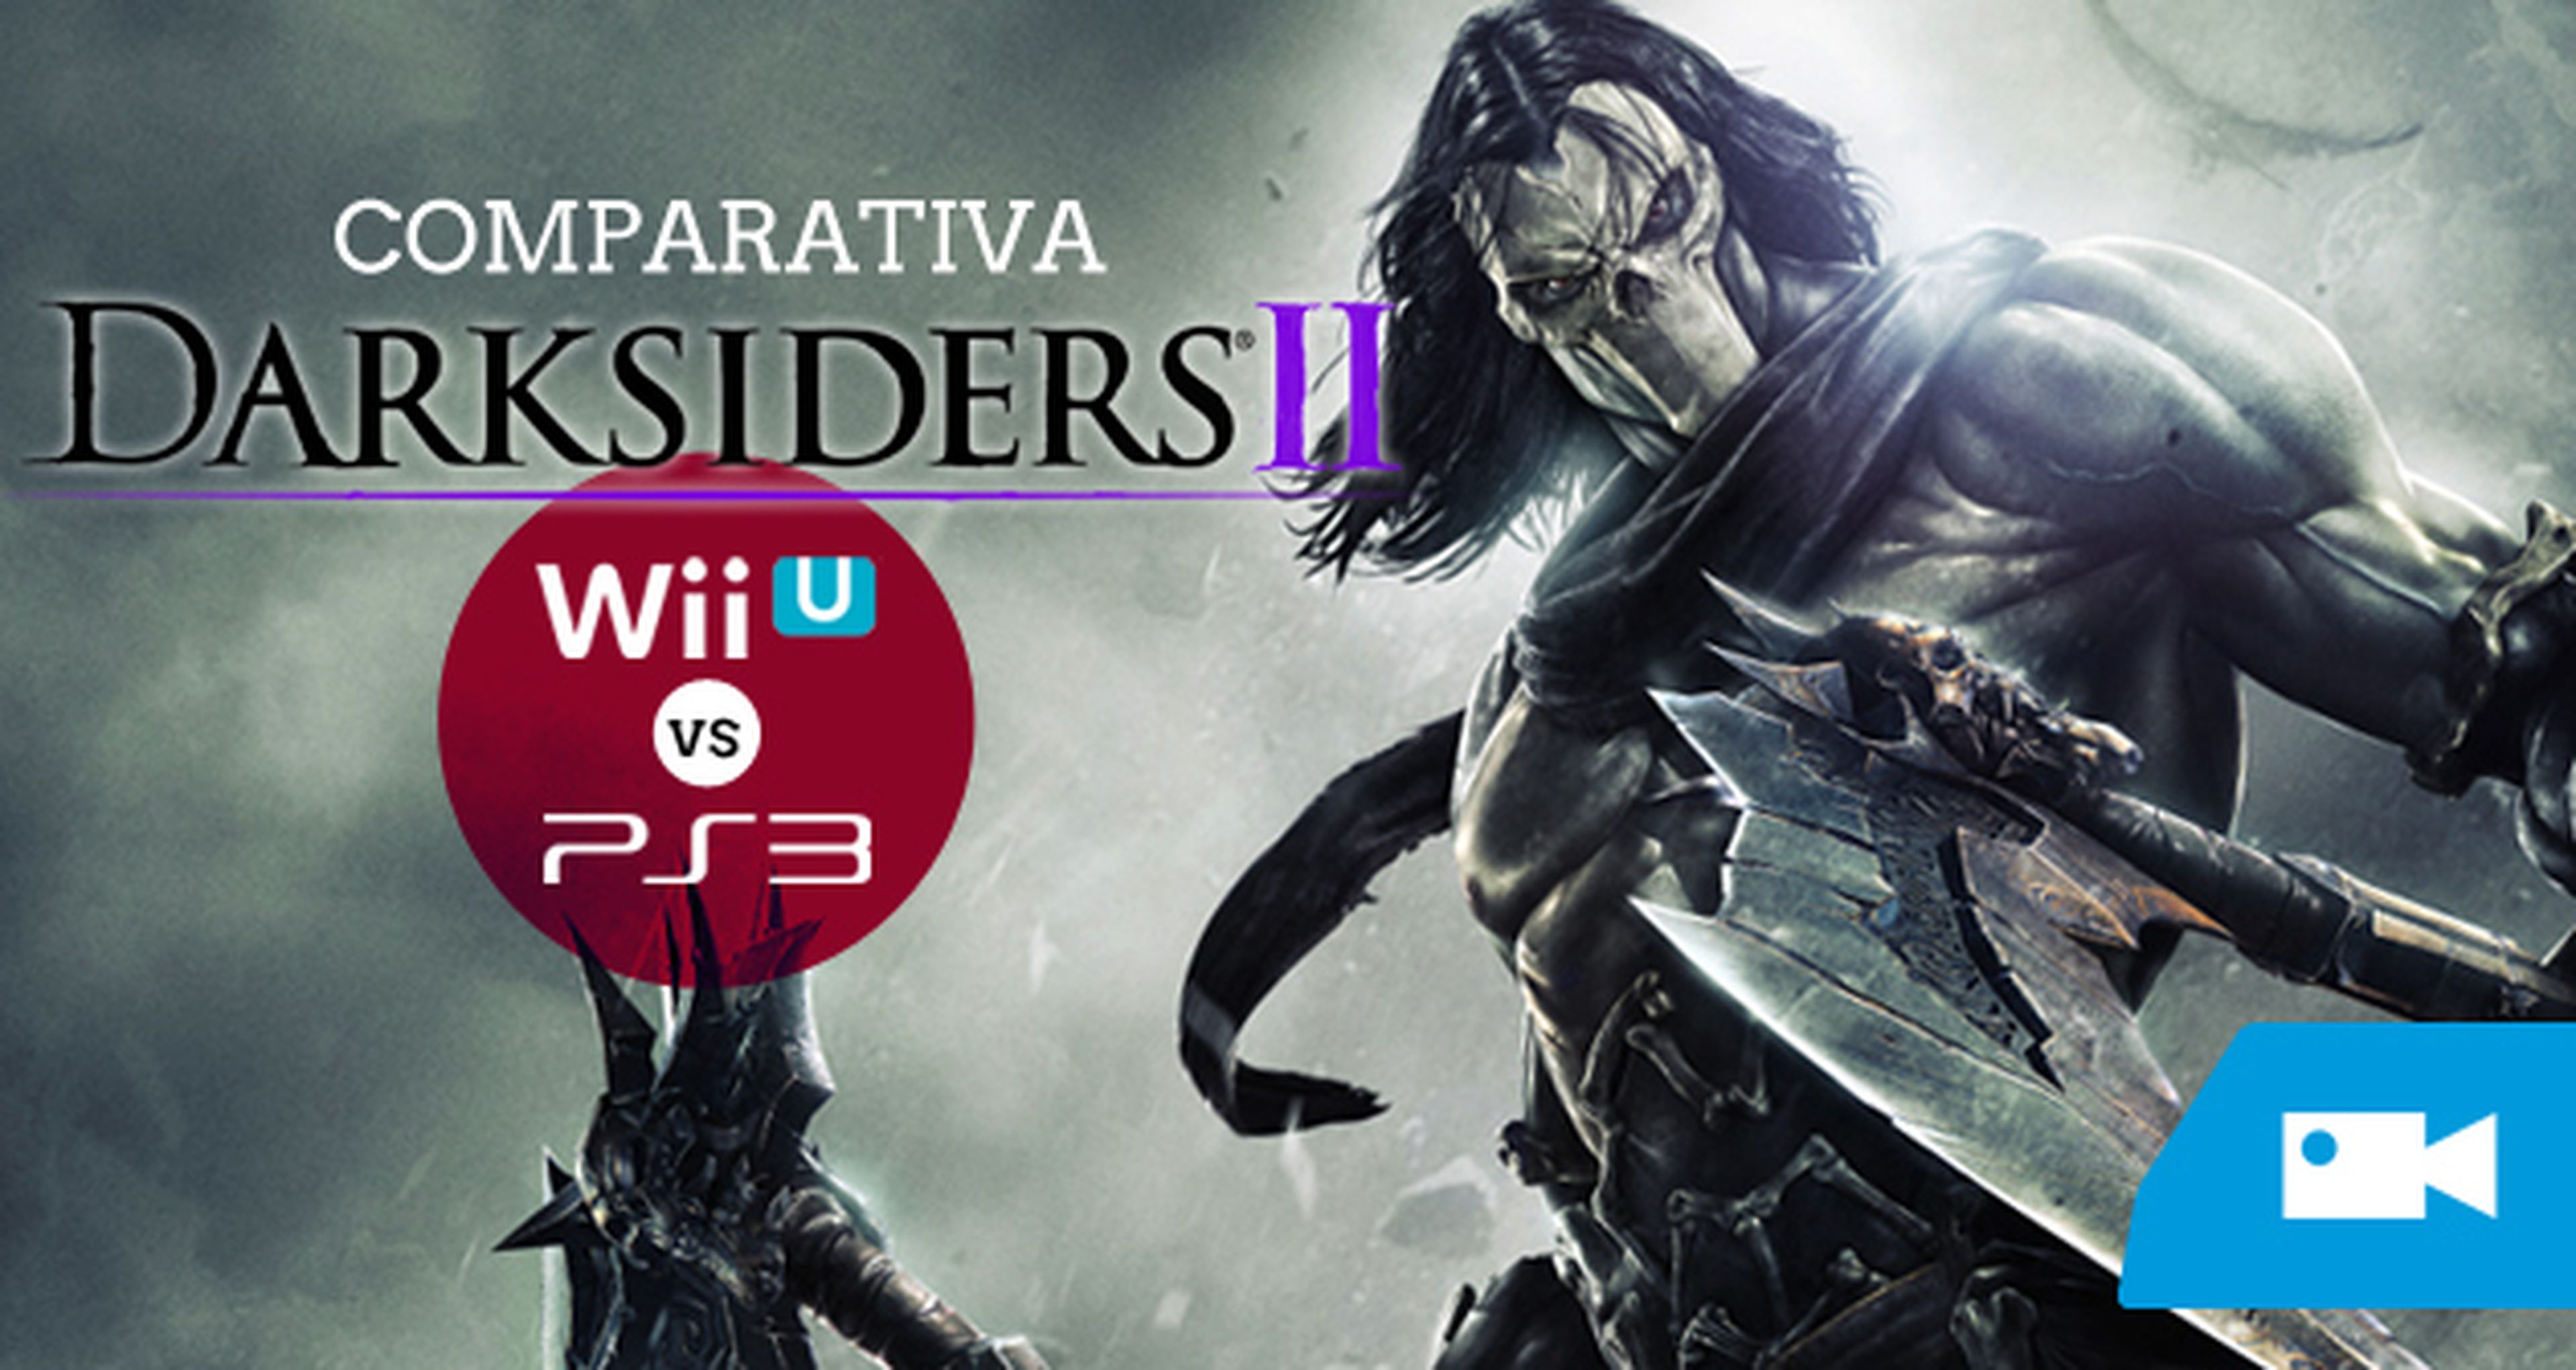 Darksiders II: Wii U vs PS3